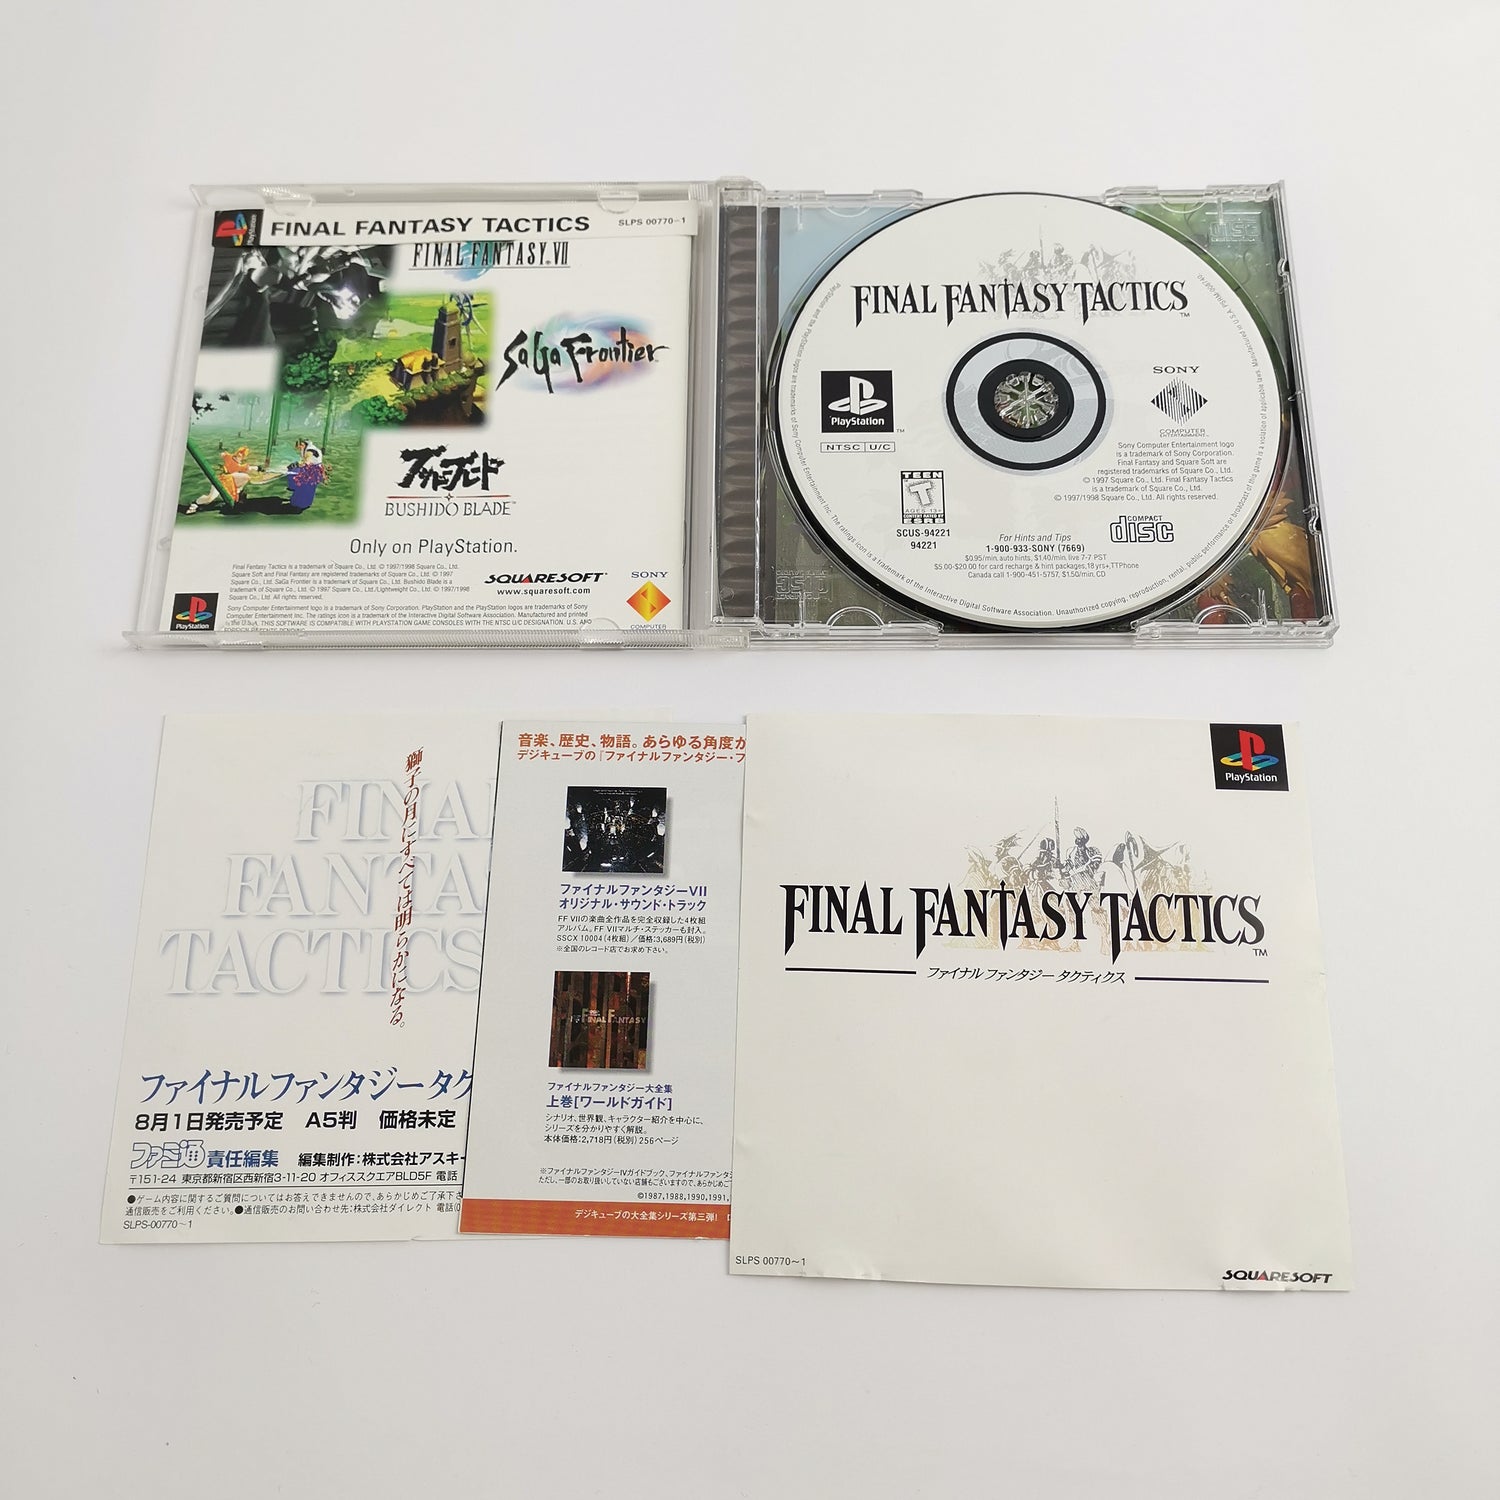 Sony Playstation 1 Game: Final Fantasy Tactics | PS1 PSX - OVP NTSC-U/C USA